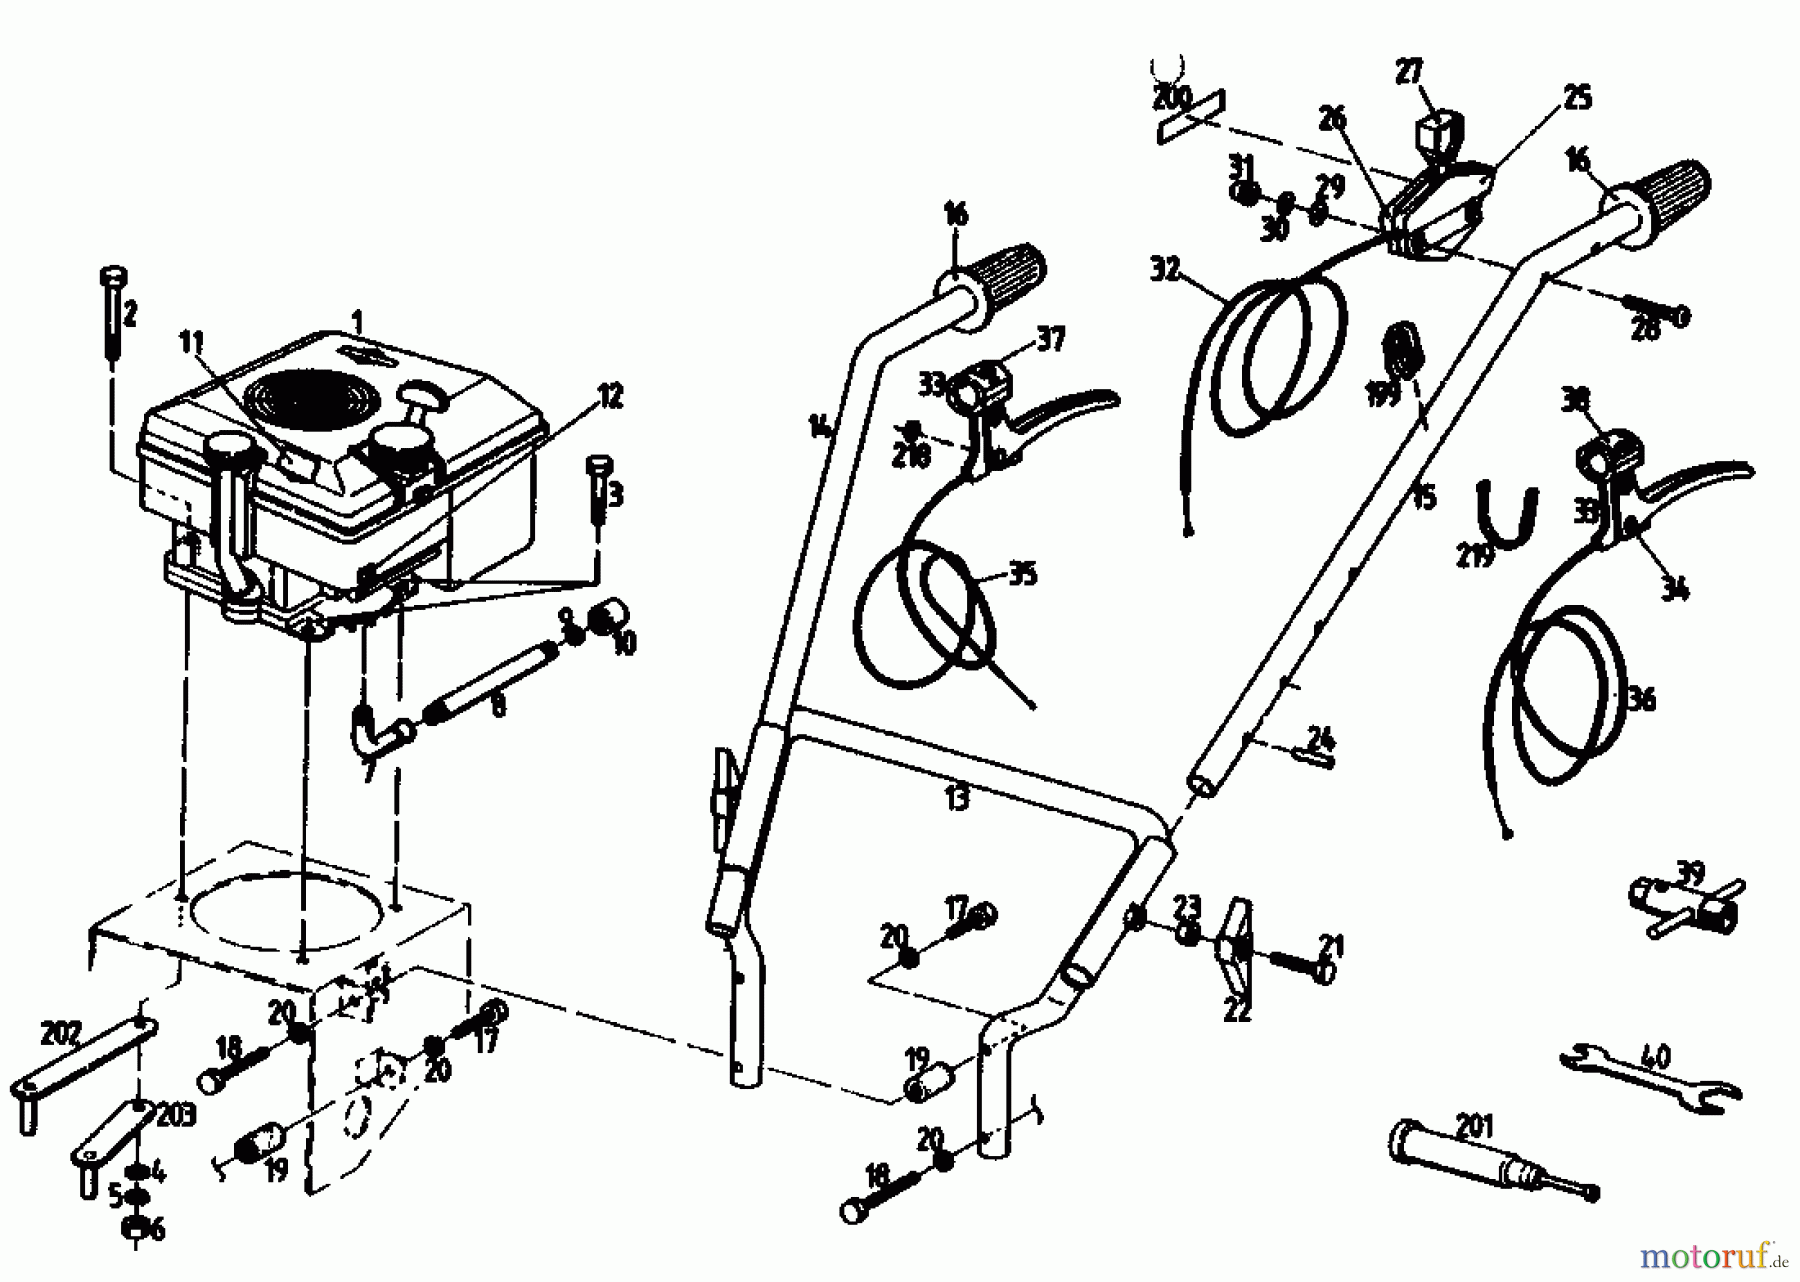  Gutbrod Cutter bar mower BM 710 07515.01  (1989) Handle